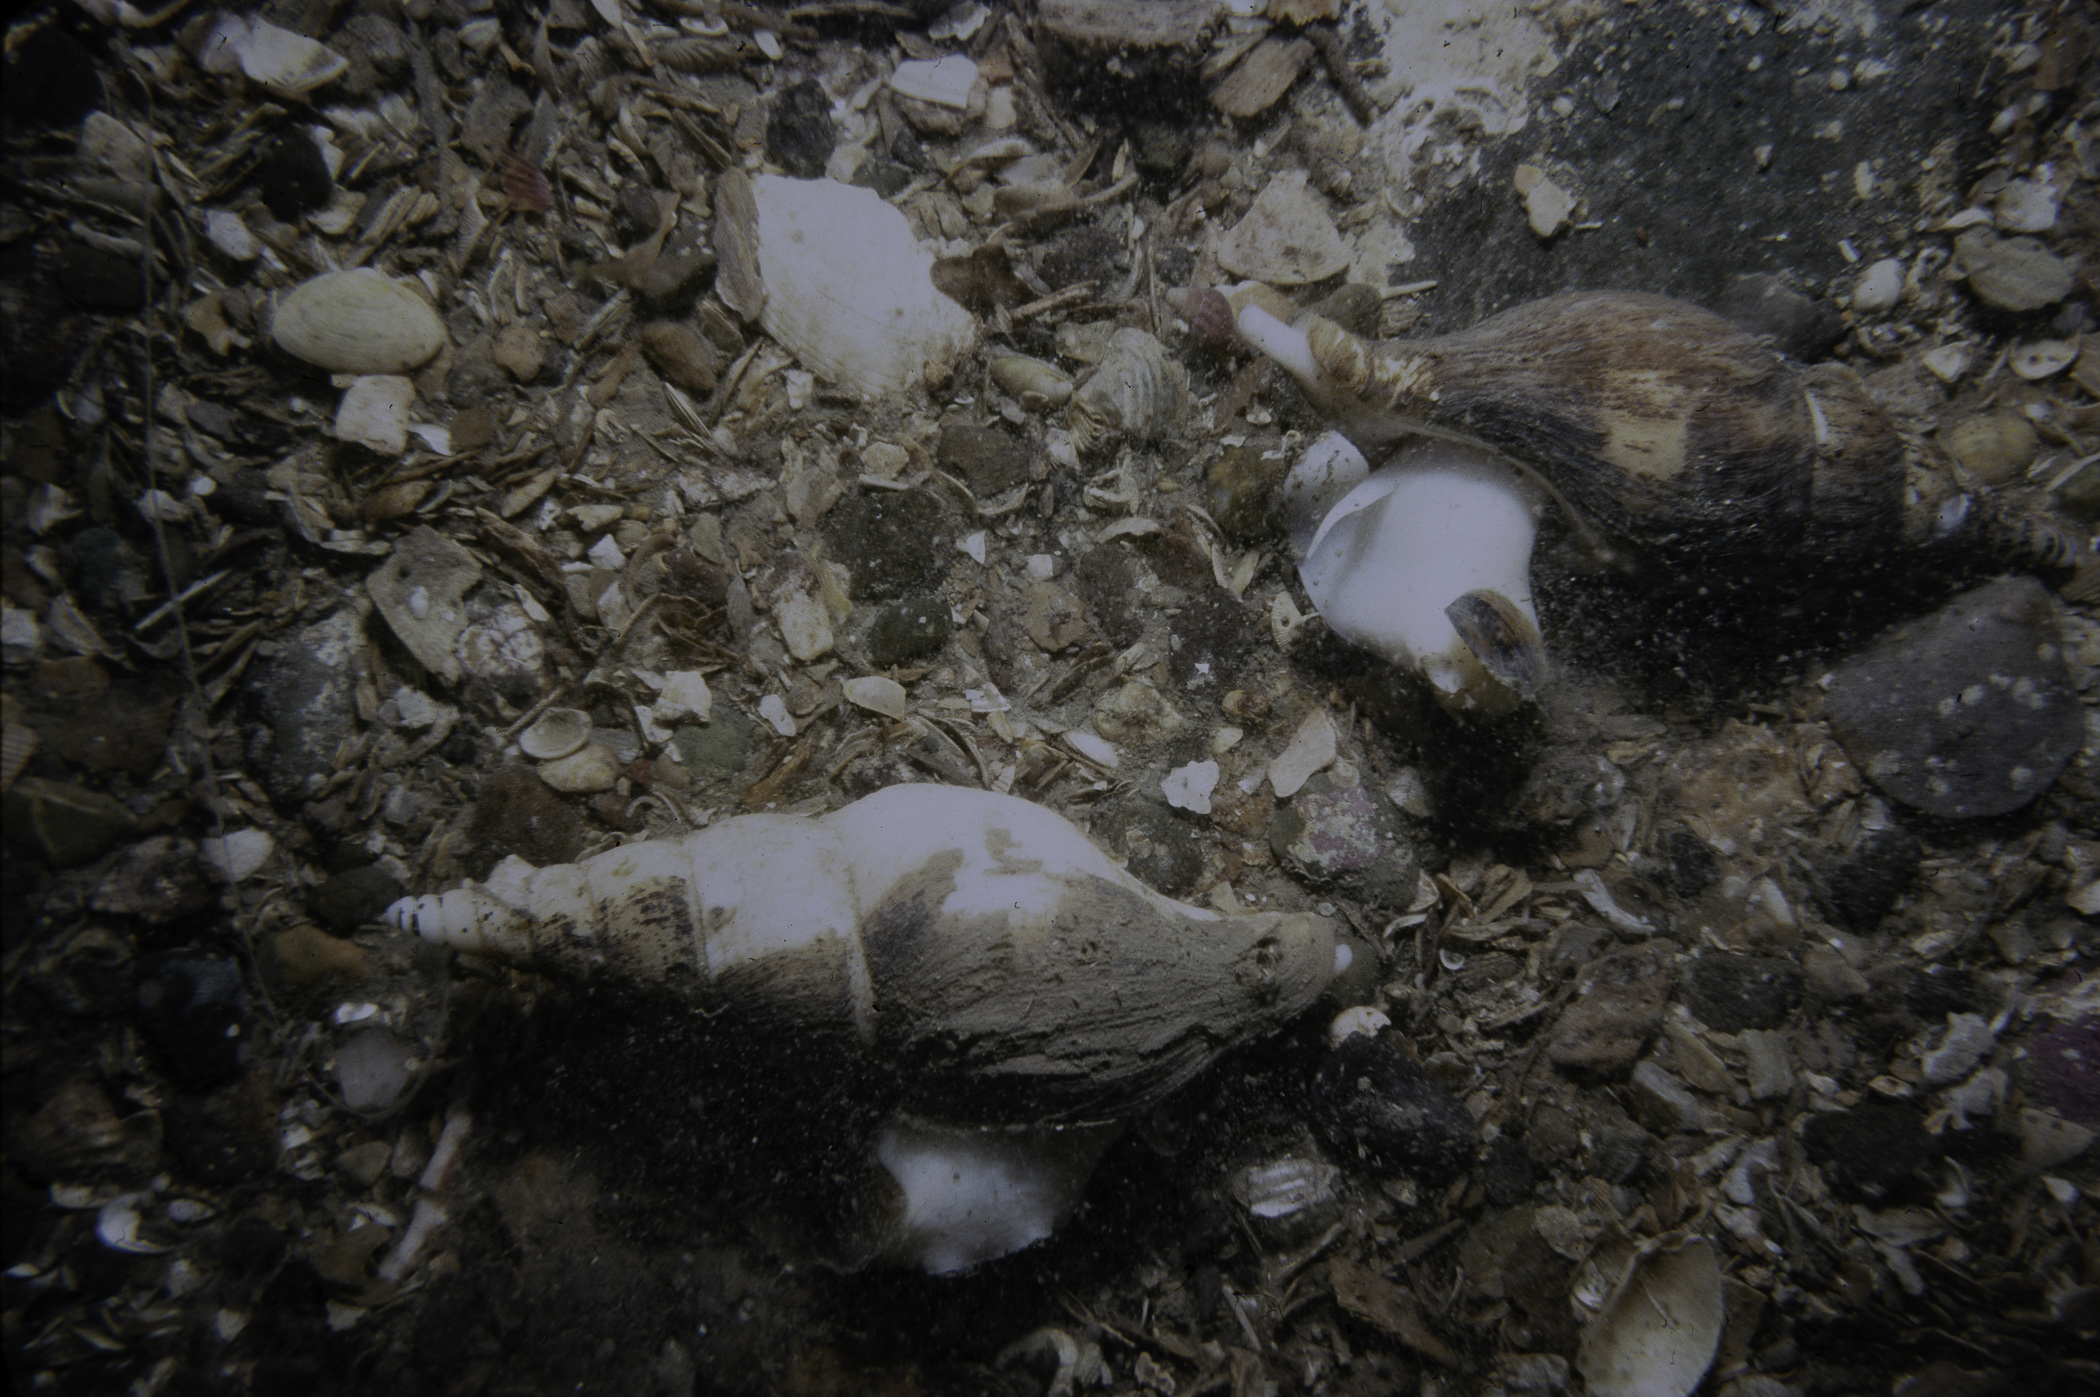 Colus (Colus) gracilis. Site: Skullmartin Rock, Ballywalter. 